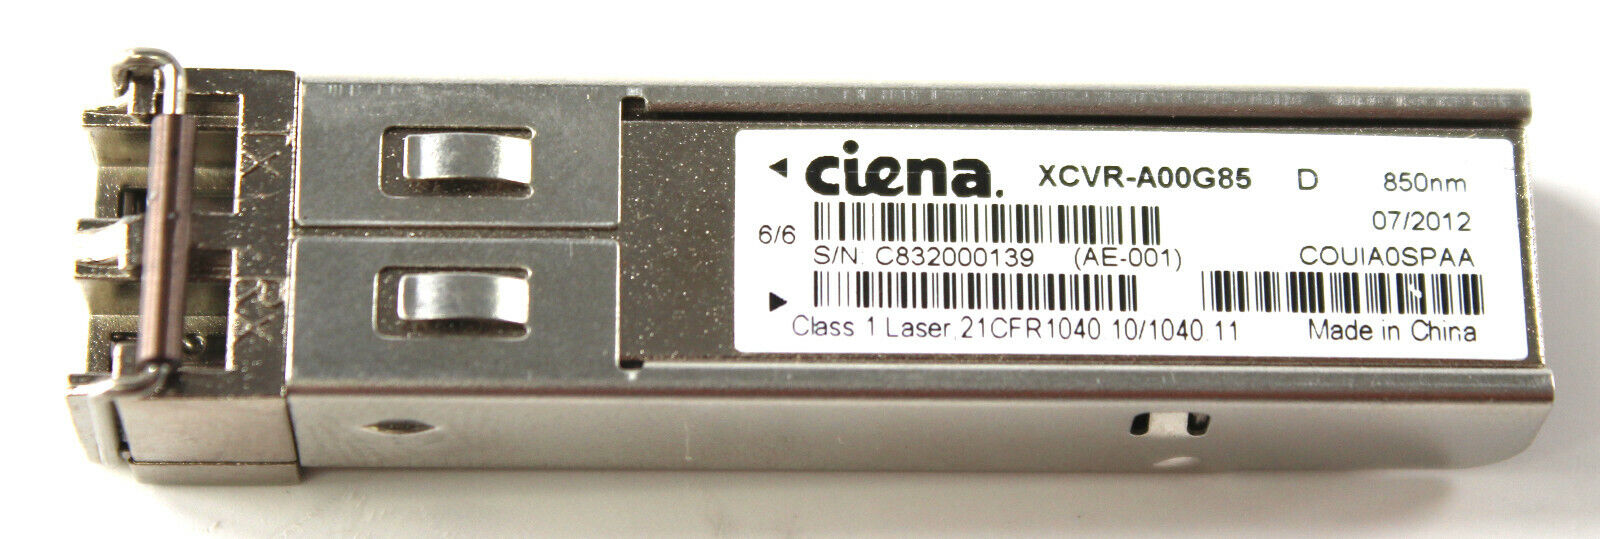 Ciena XCVR-A00G85 D COUIA0SPAA 850nm 1000Base-Sx Optical Transceiver